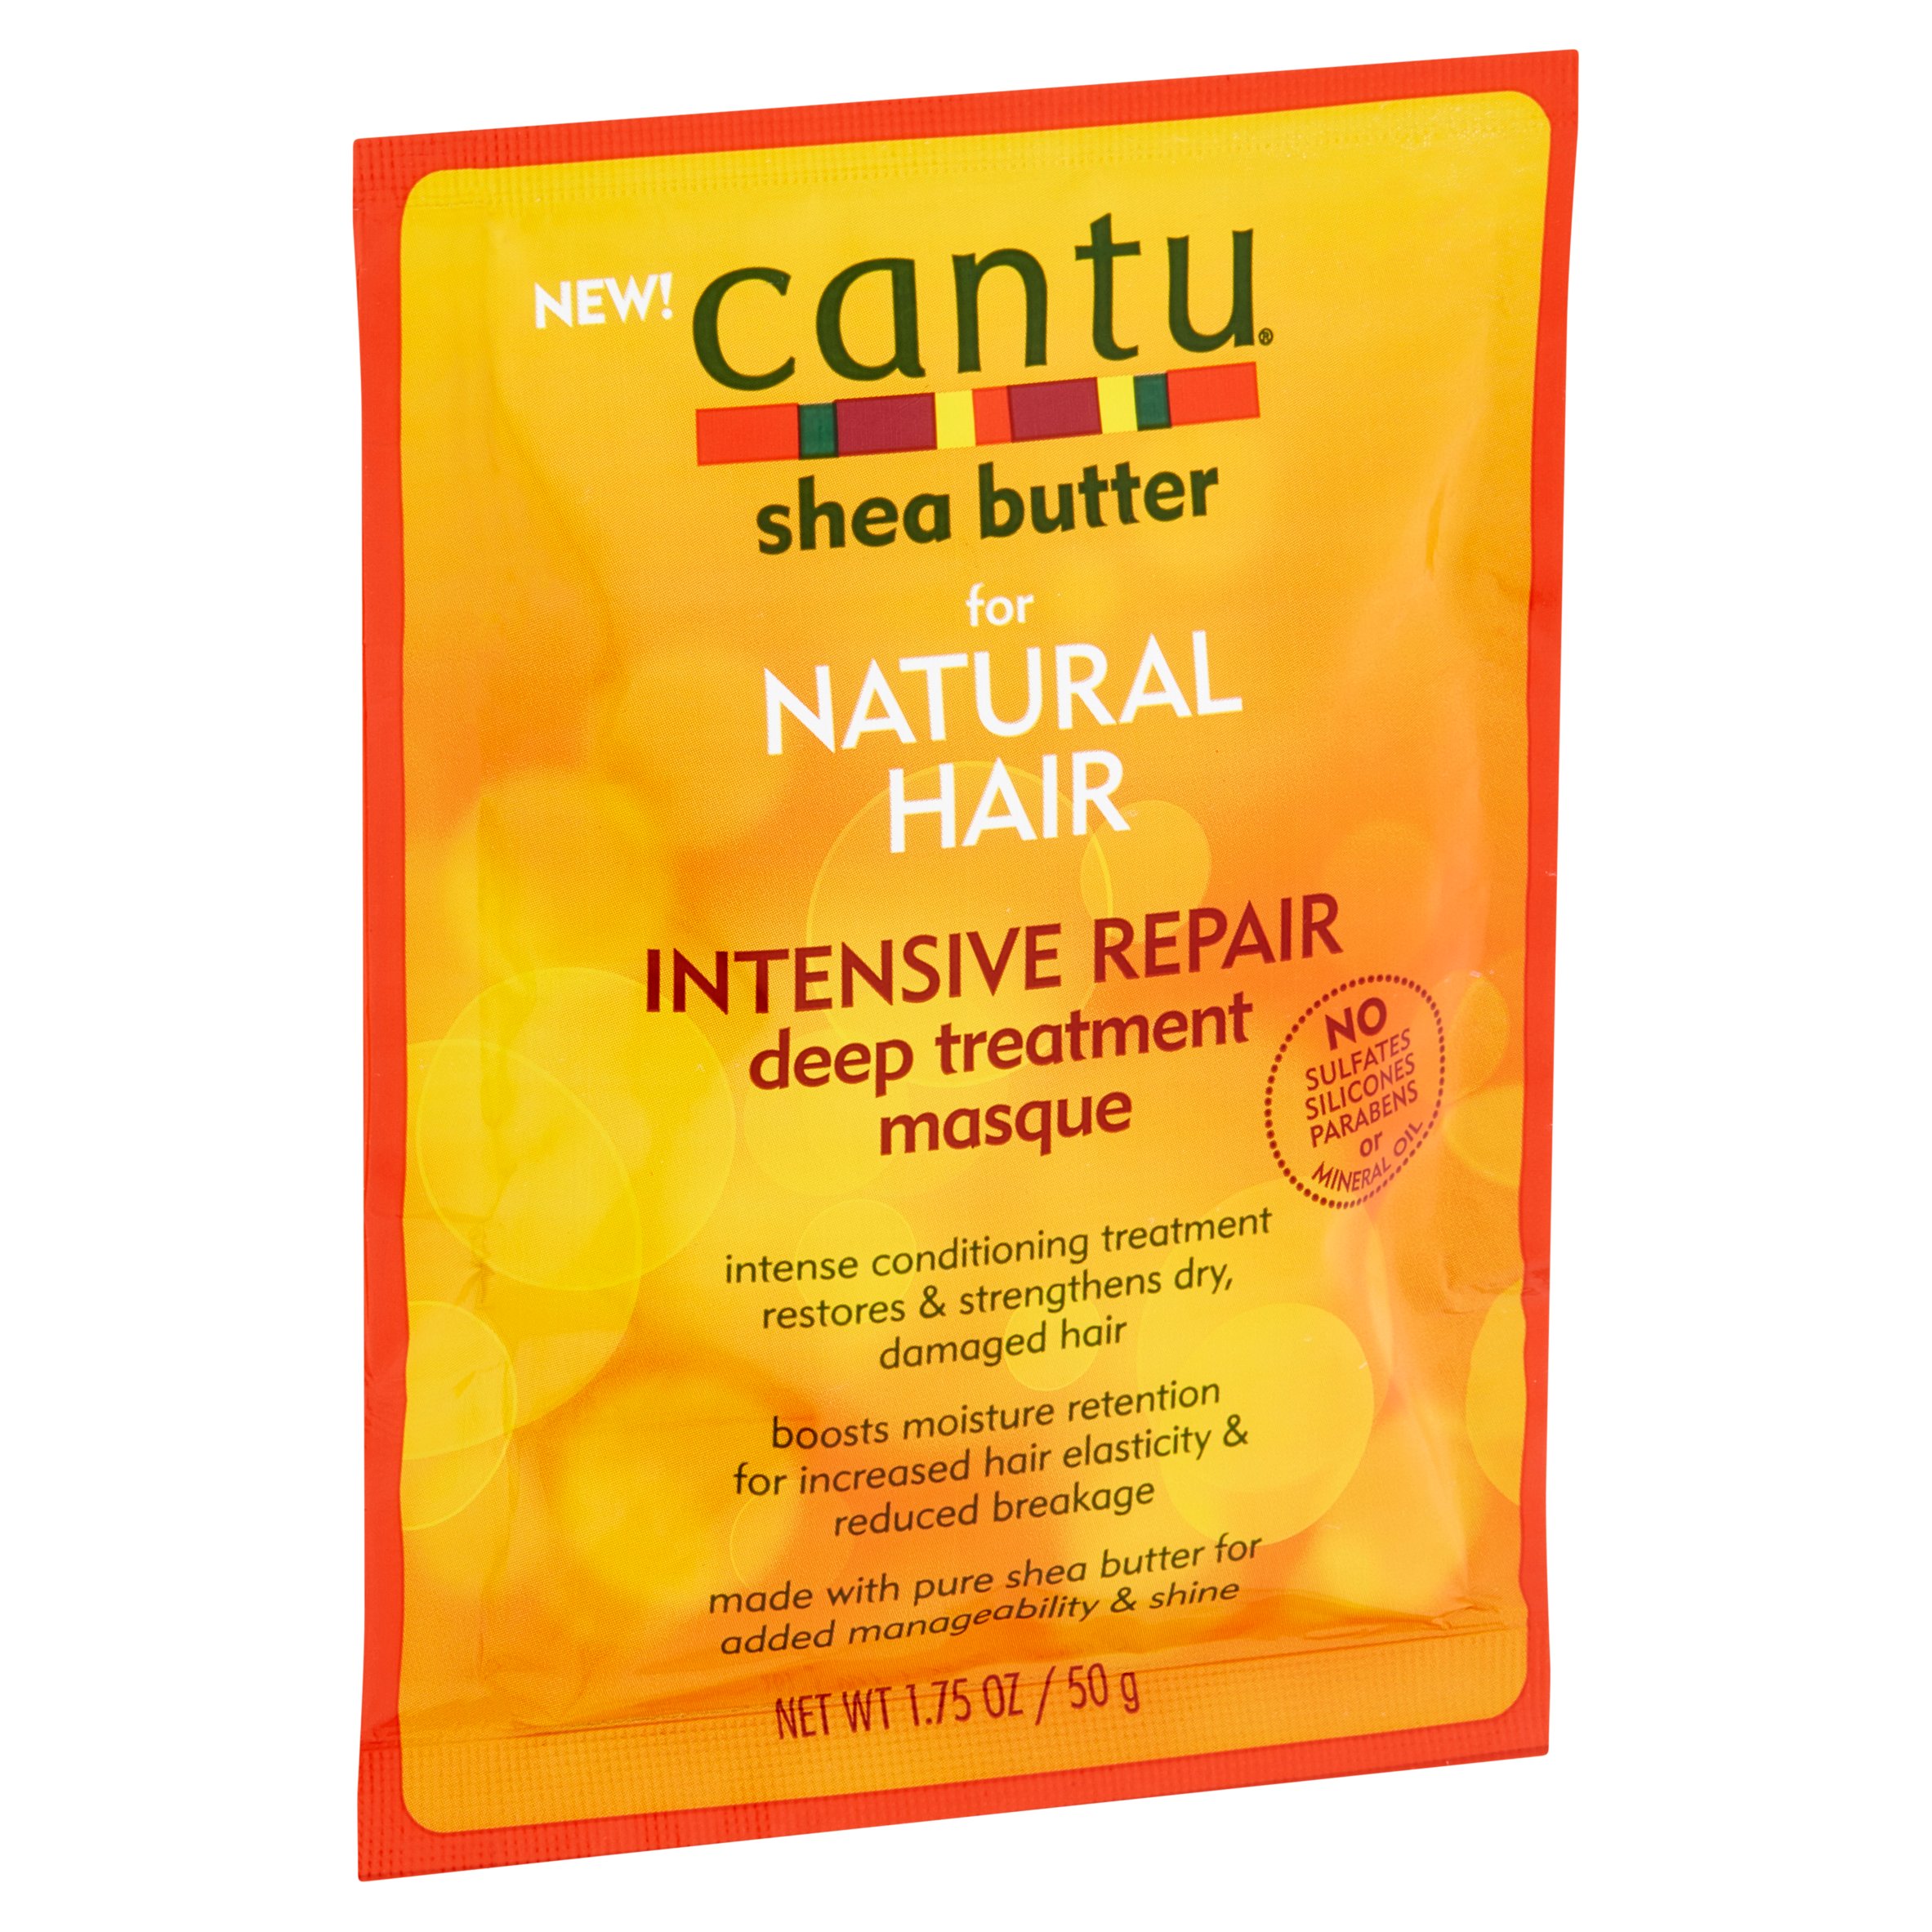 Cantu Intensive Repair Deep Treatment Masque, 1.75 oz - image 2 of 4